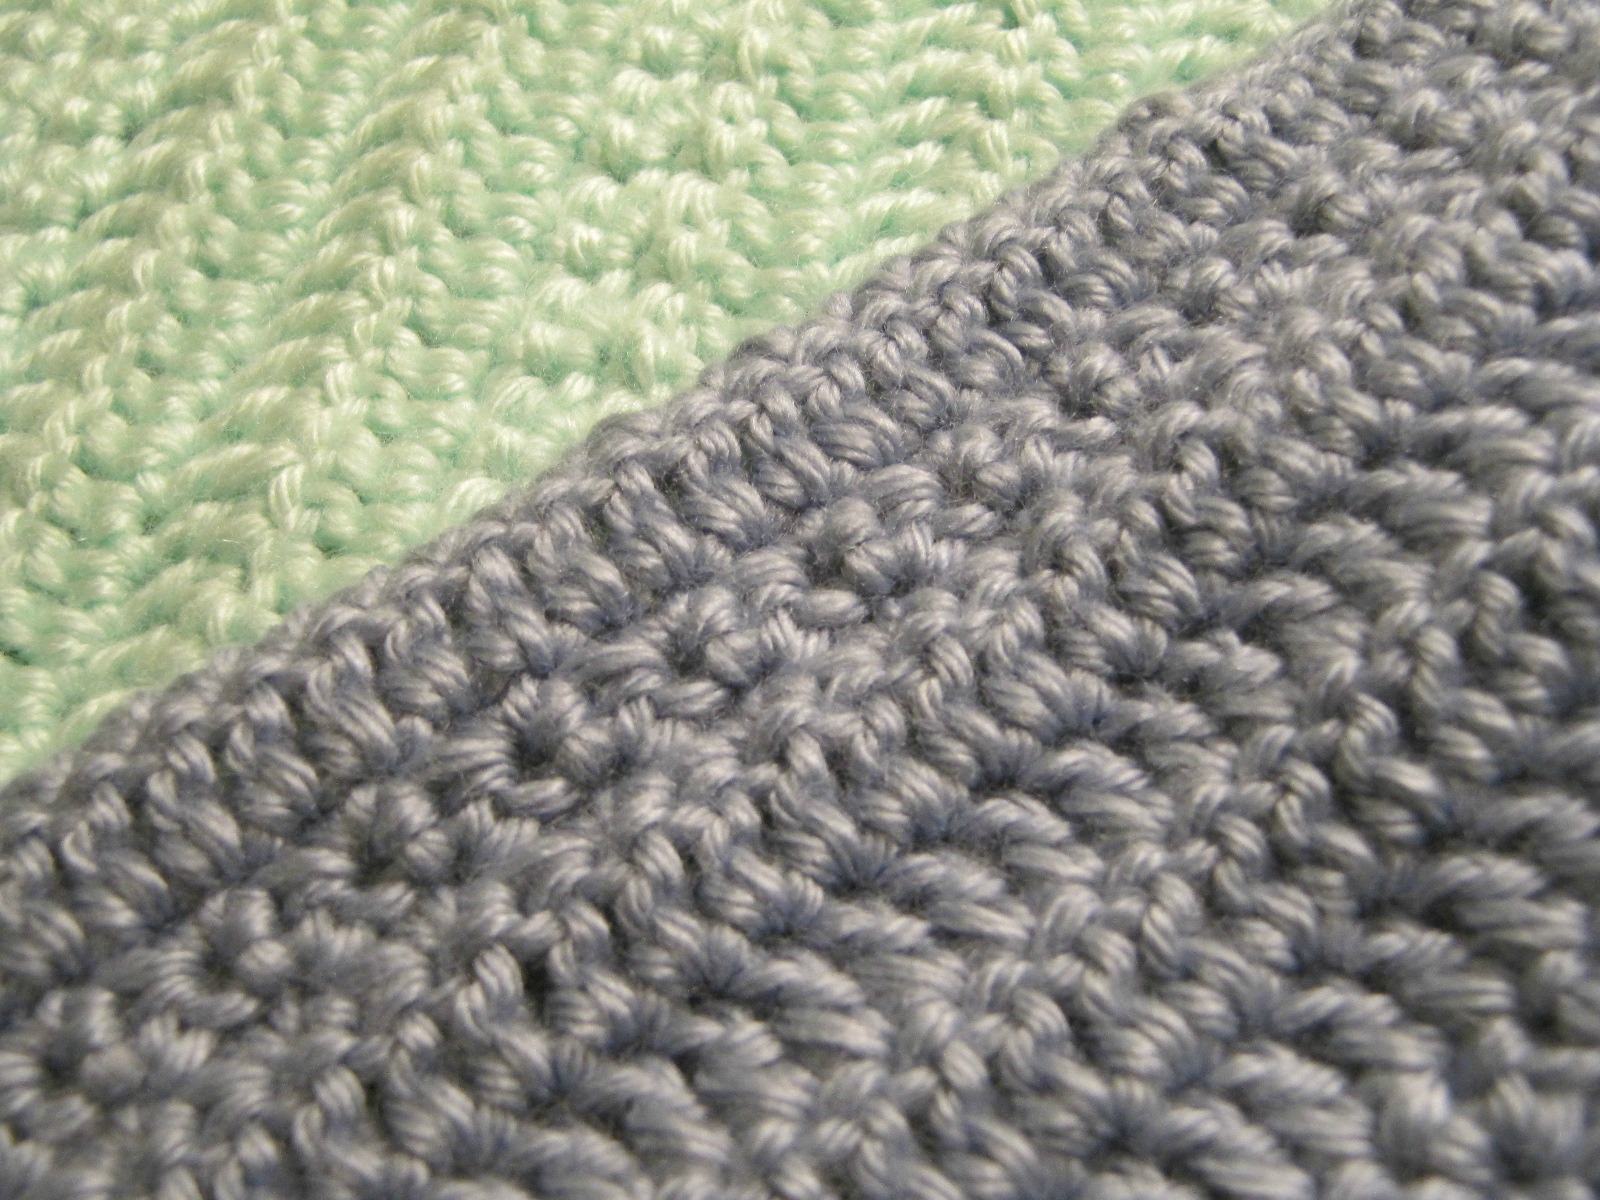 http://4.bp.blogspot.com/-jwghWkcnoXo/Tpeg9EtKFRI/AAAAAAAABWg/wLNzNlYnDQ8/s1600/border-crocheted-blanket.jpg